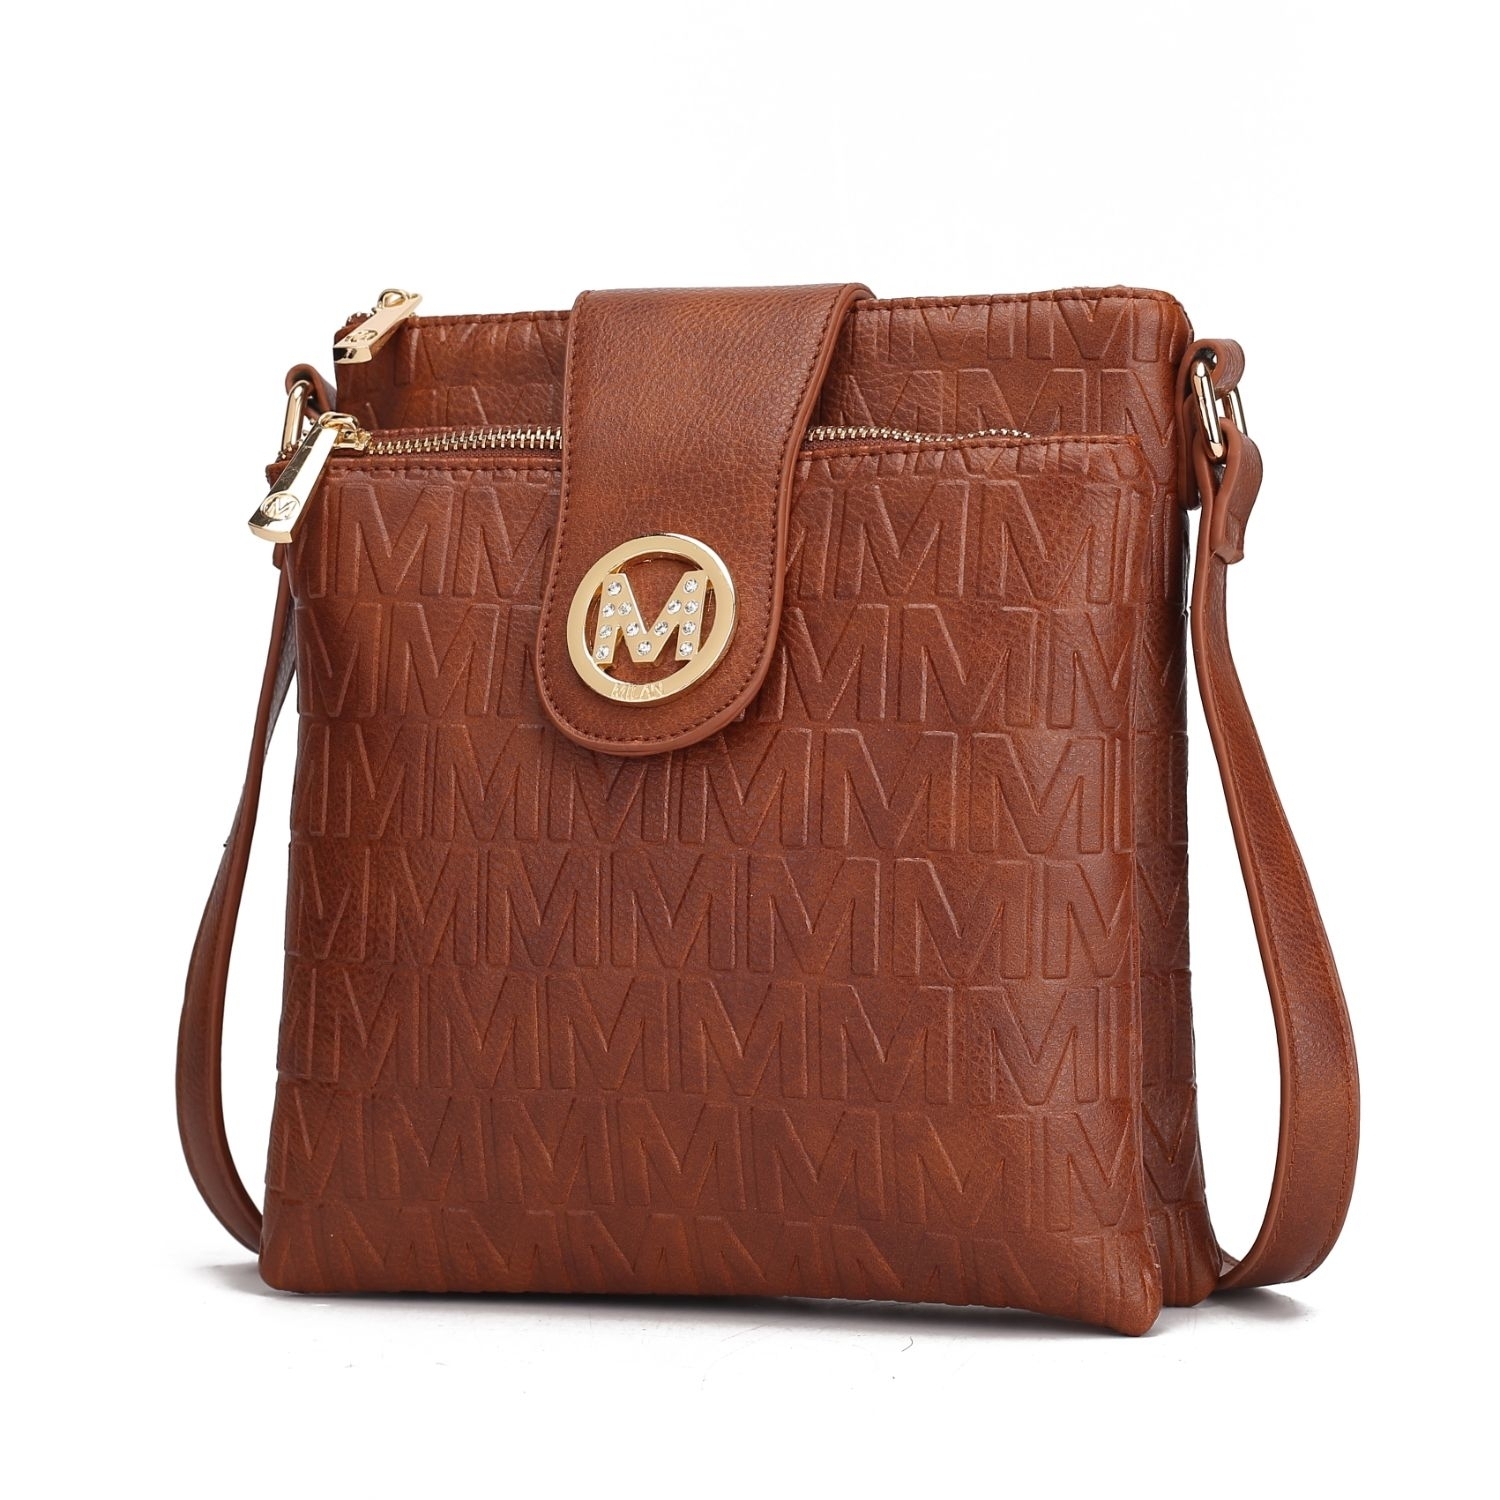 MKF Collection Sarah Crossbody Handbag By Mia K. - Camel